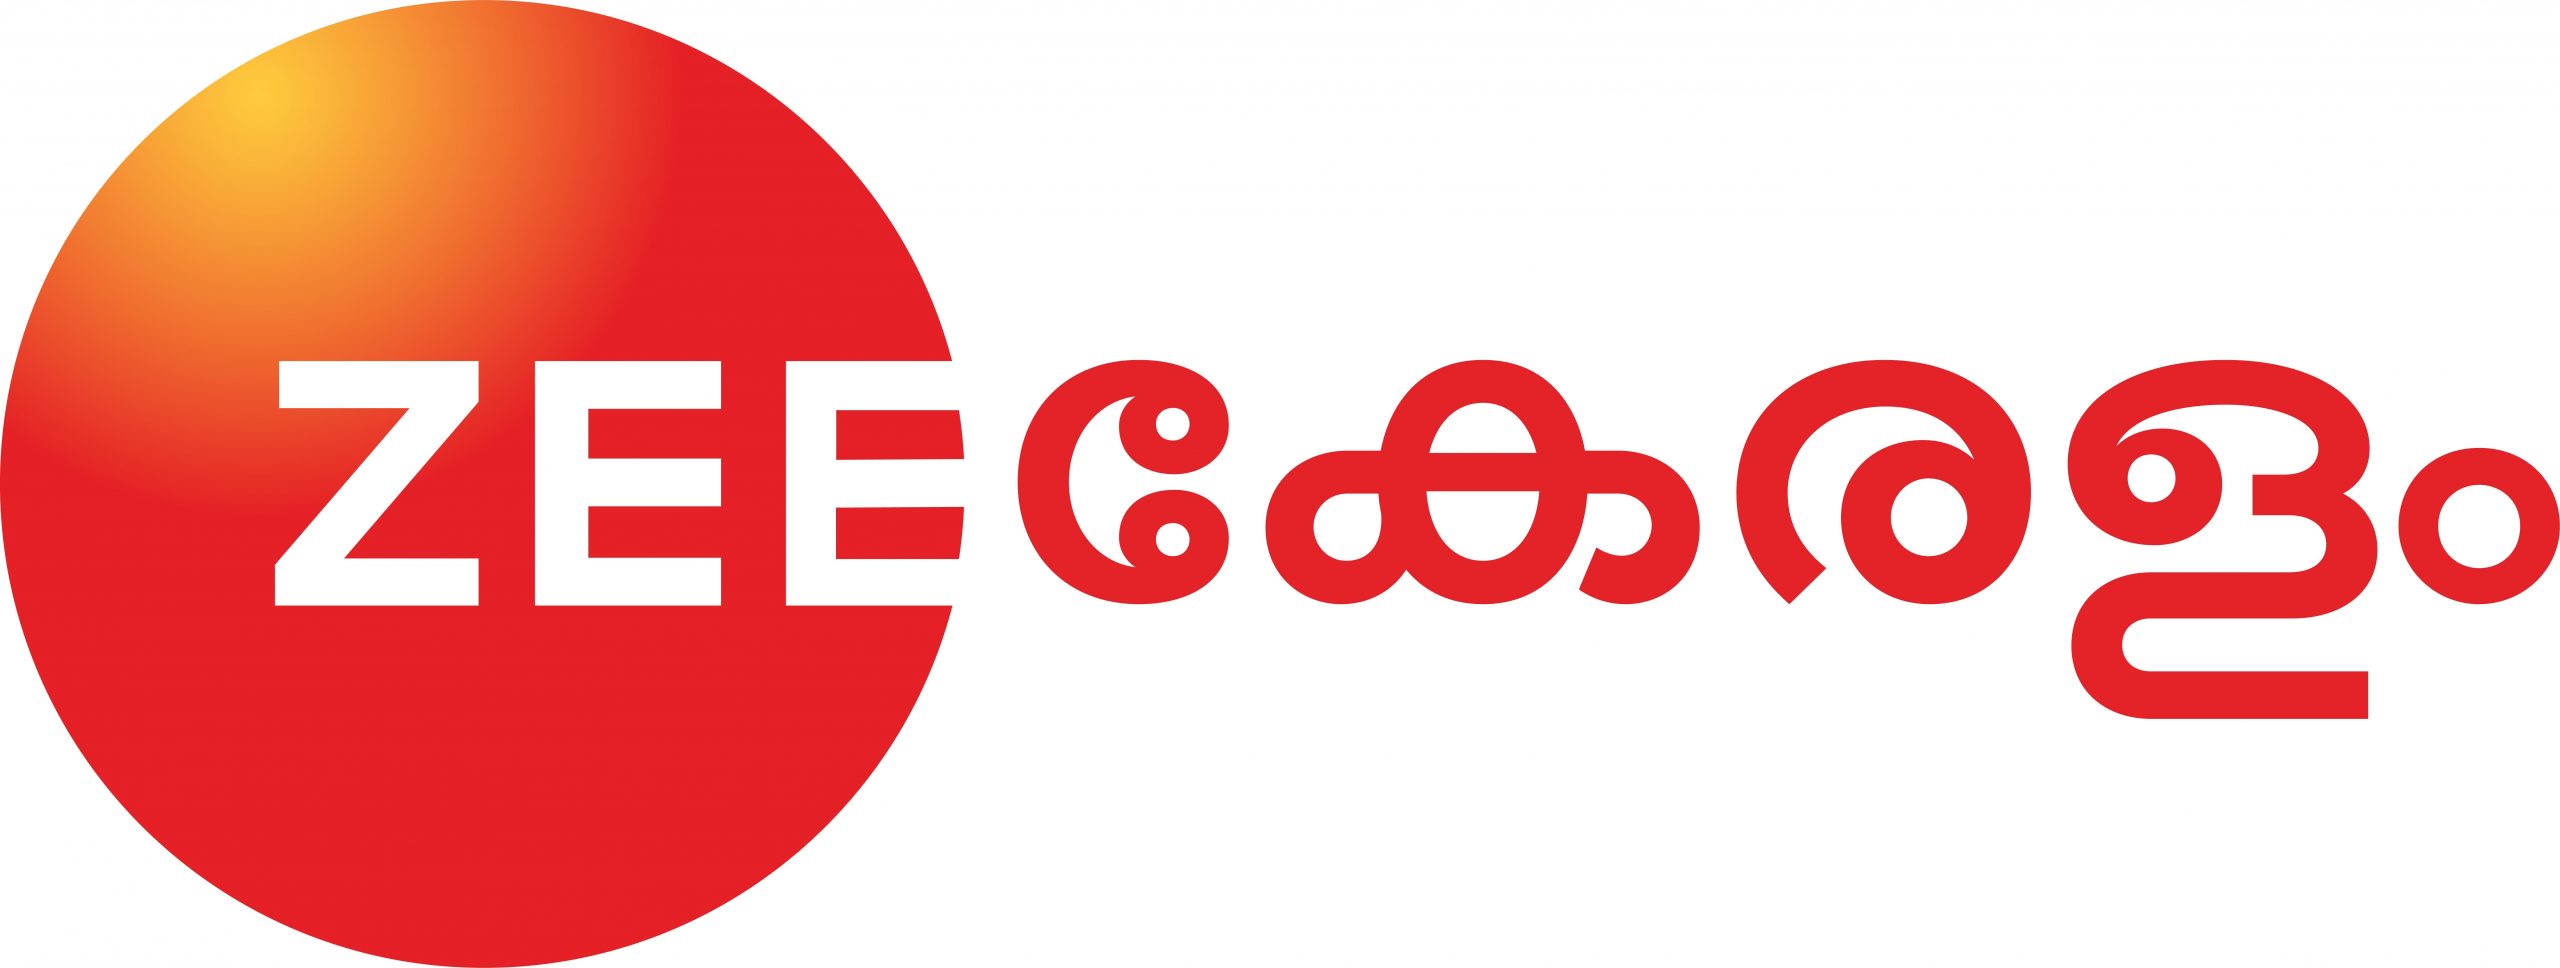 zee keralam channel official logo download